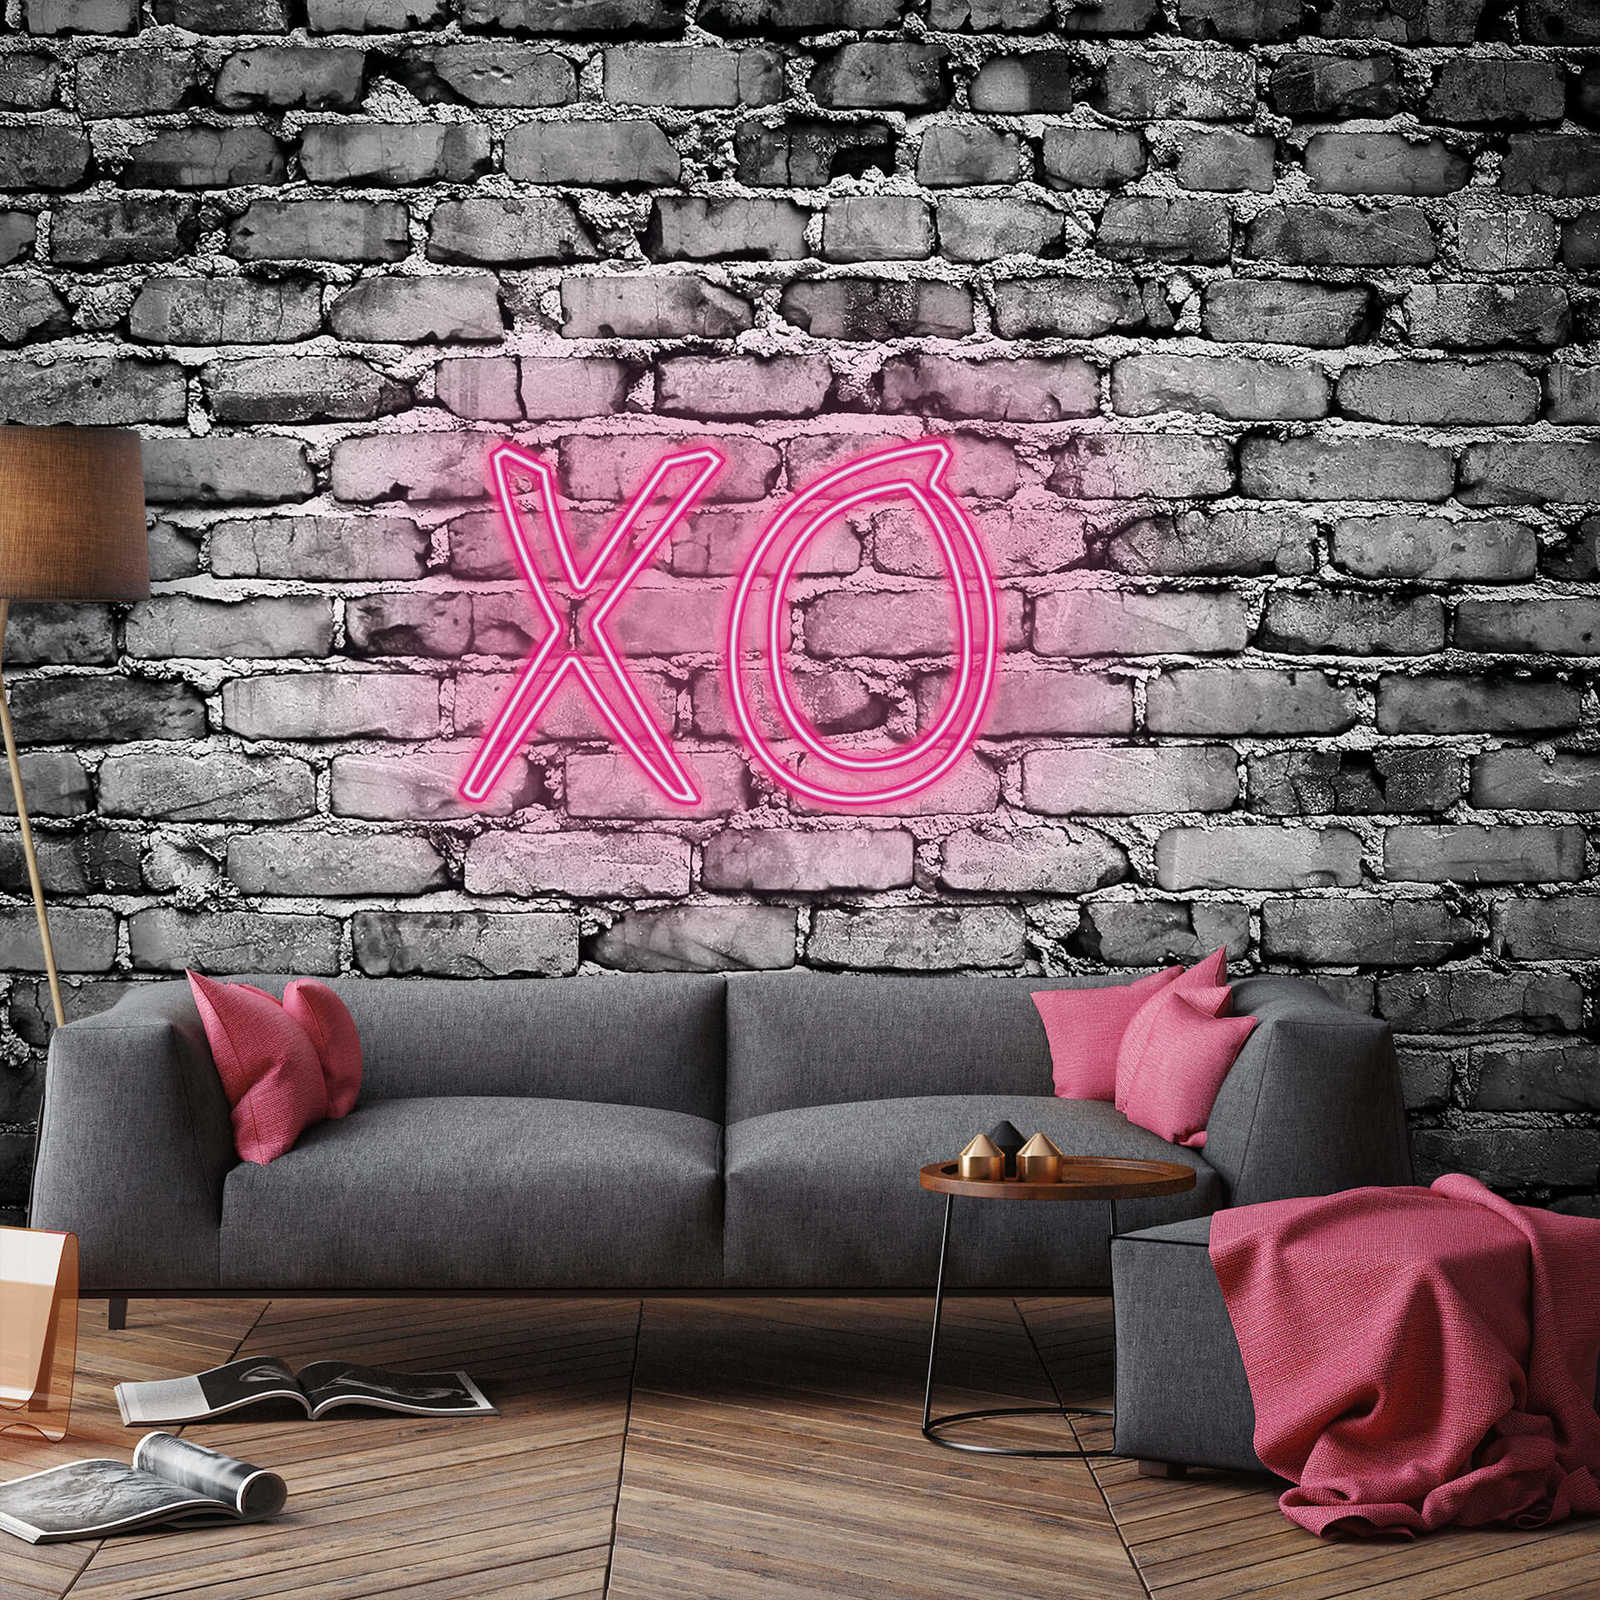             Photo wallpaper stone wall with illuminated letters XO
        